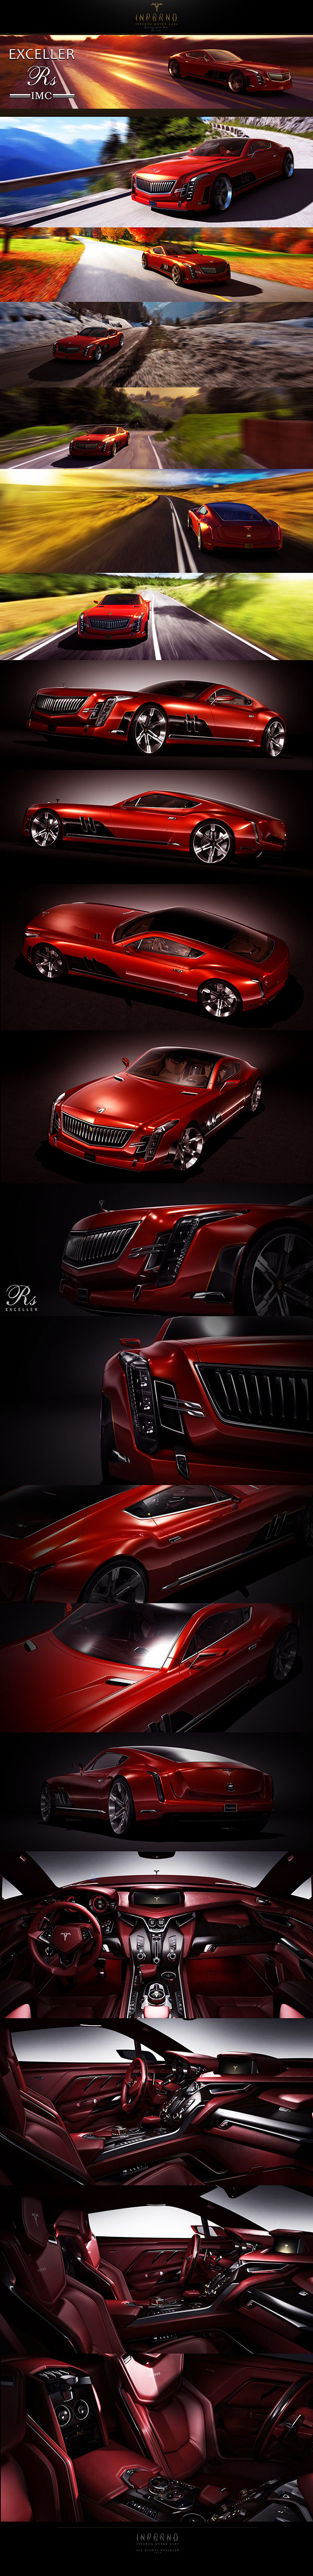 automotive    Concept Car  Car  3D Modeling  Rendering  Photography design  Industrial Design  piotr czyzewski  exclusiwe  luxury